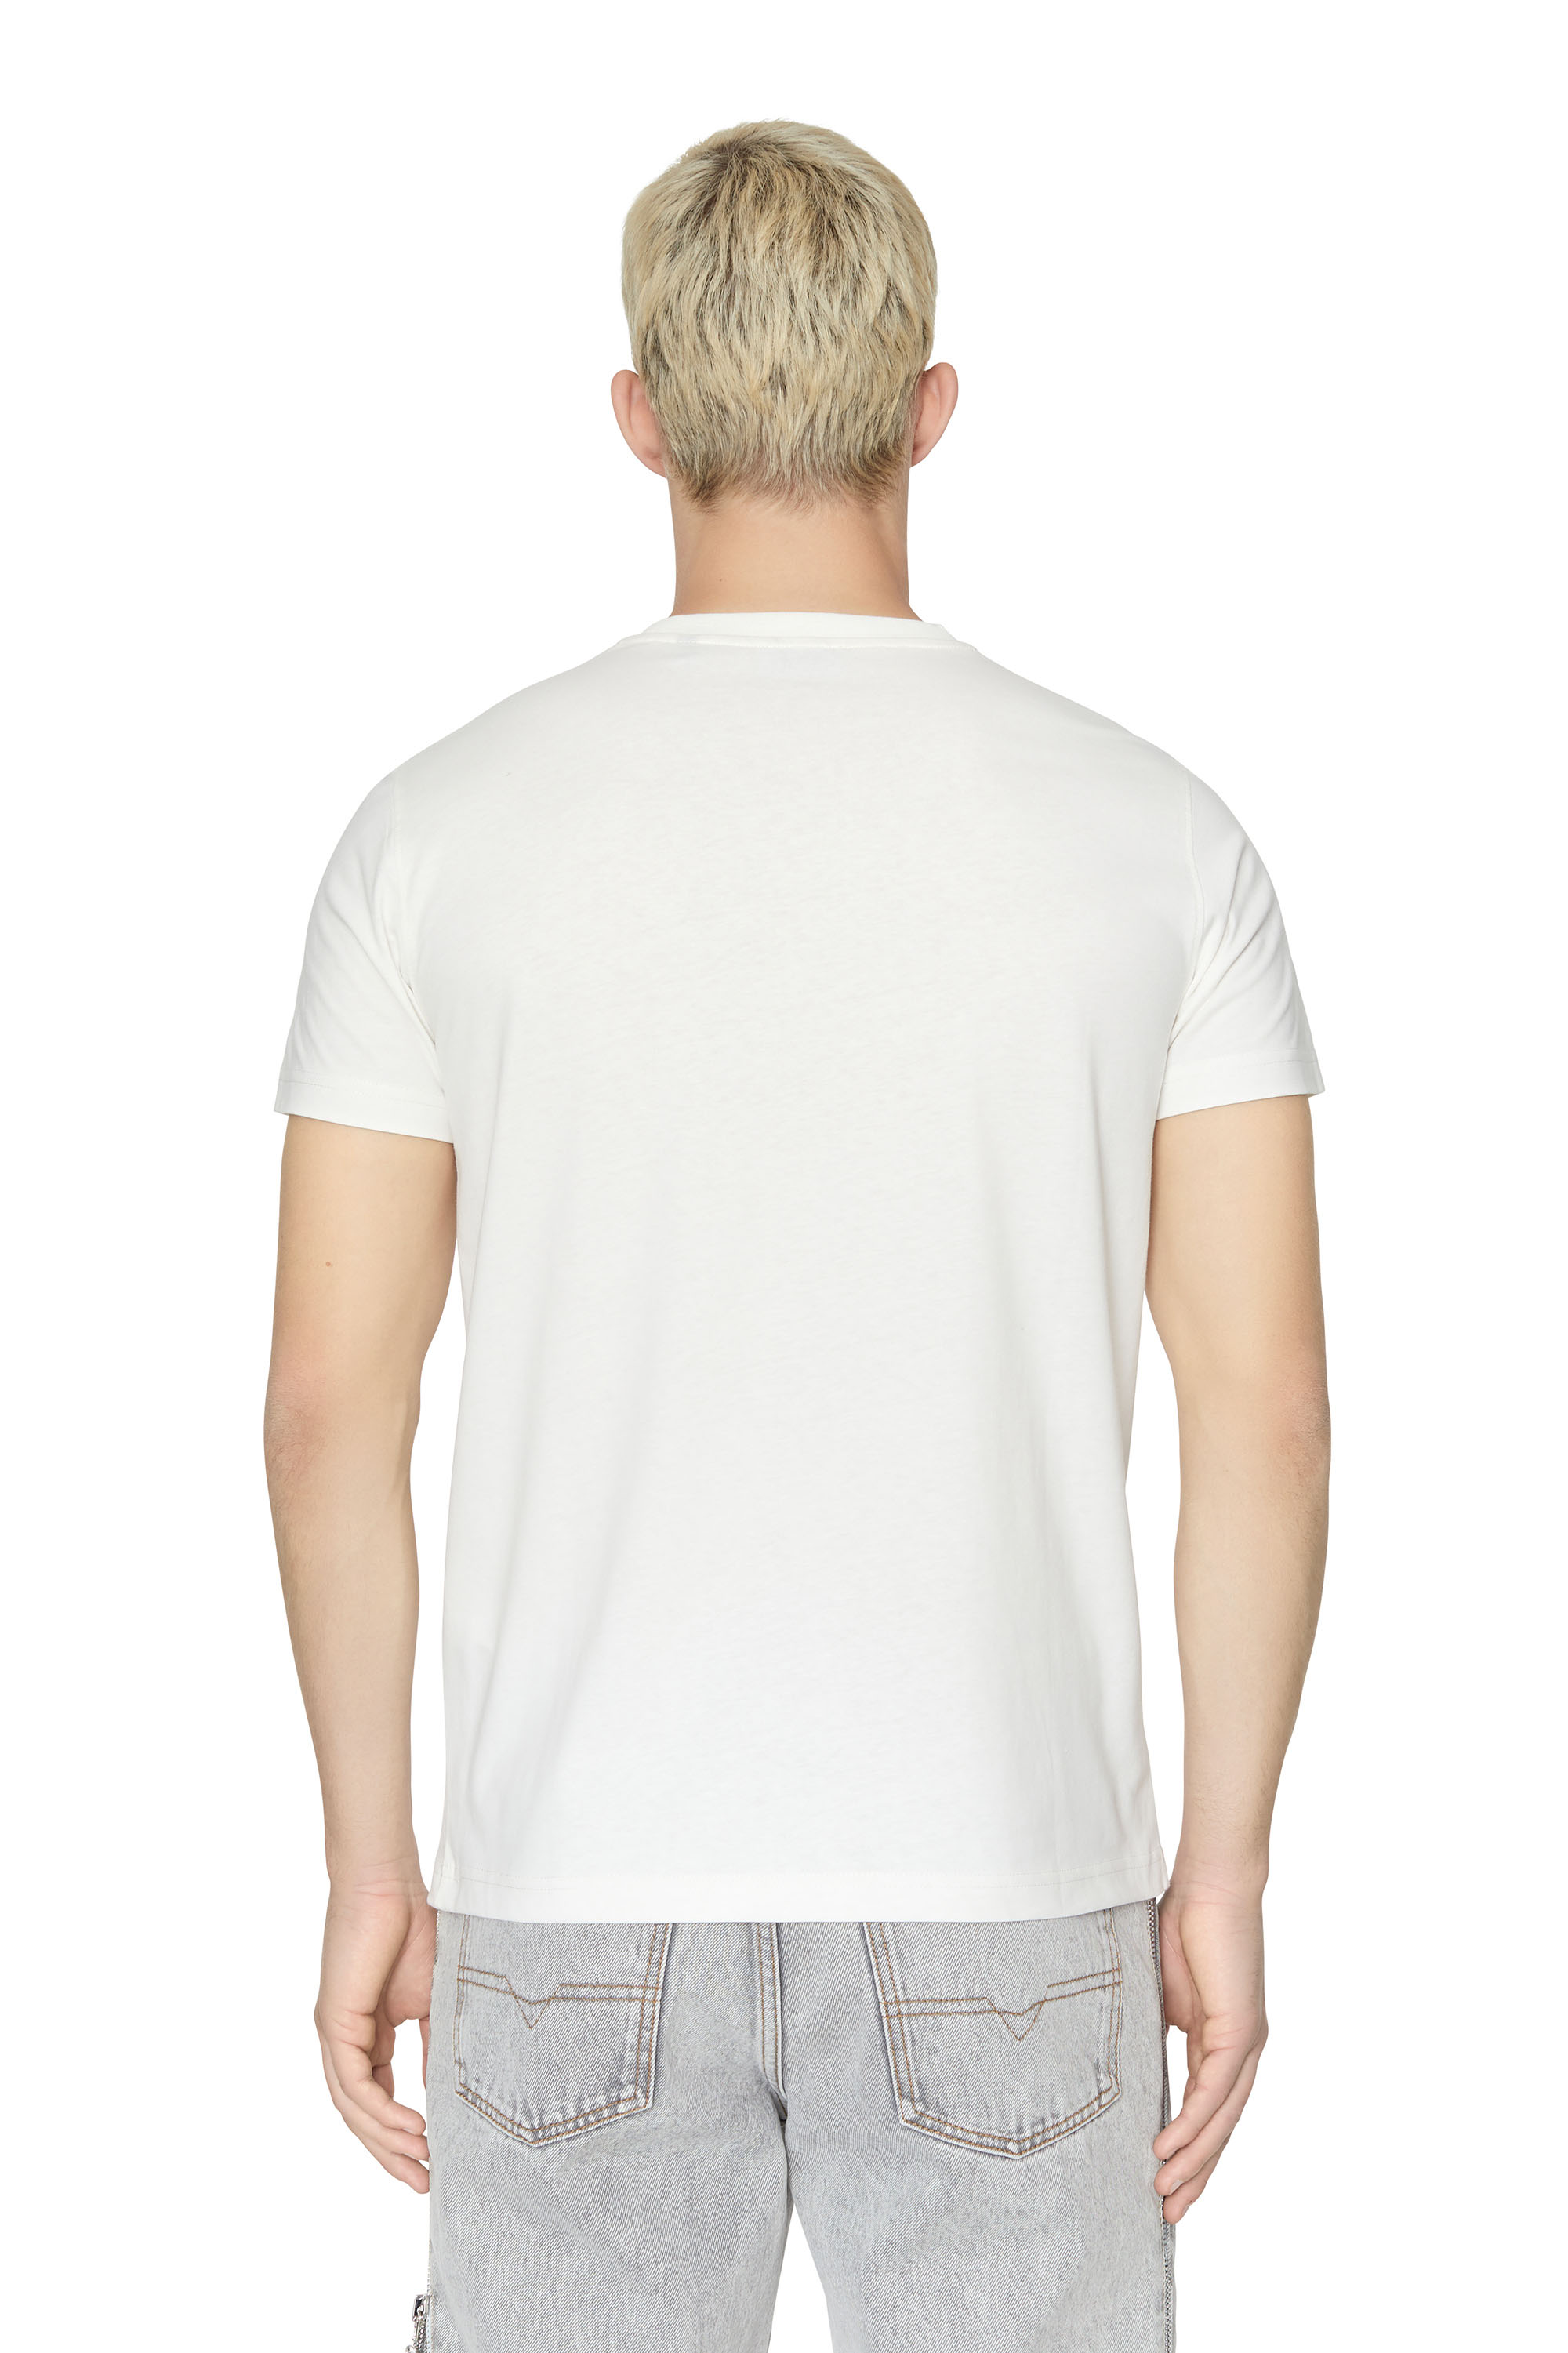 Camiseta hombre personalizadas mx-19_005 